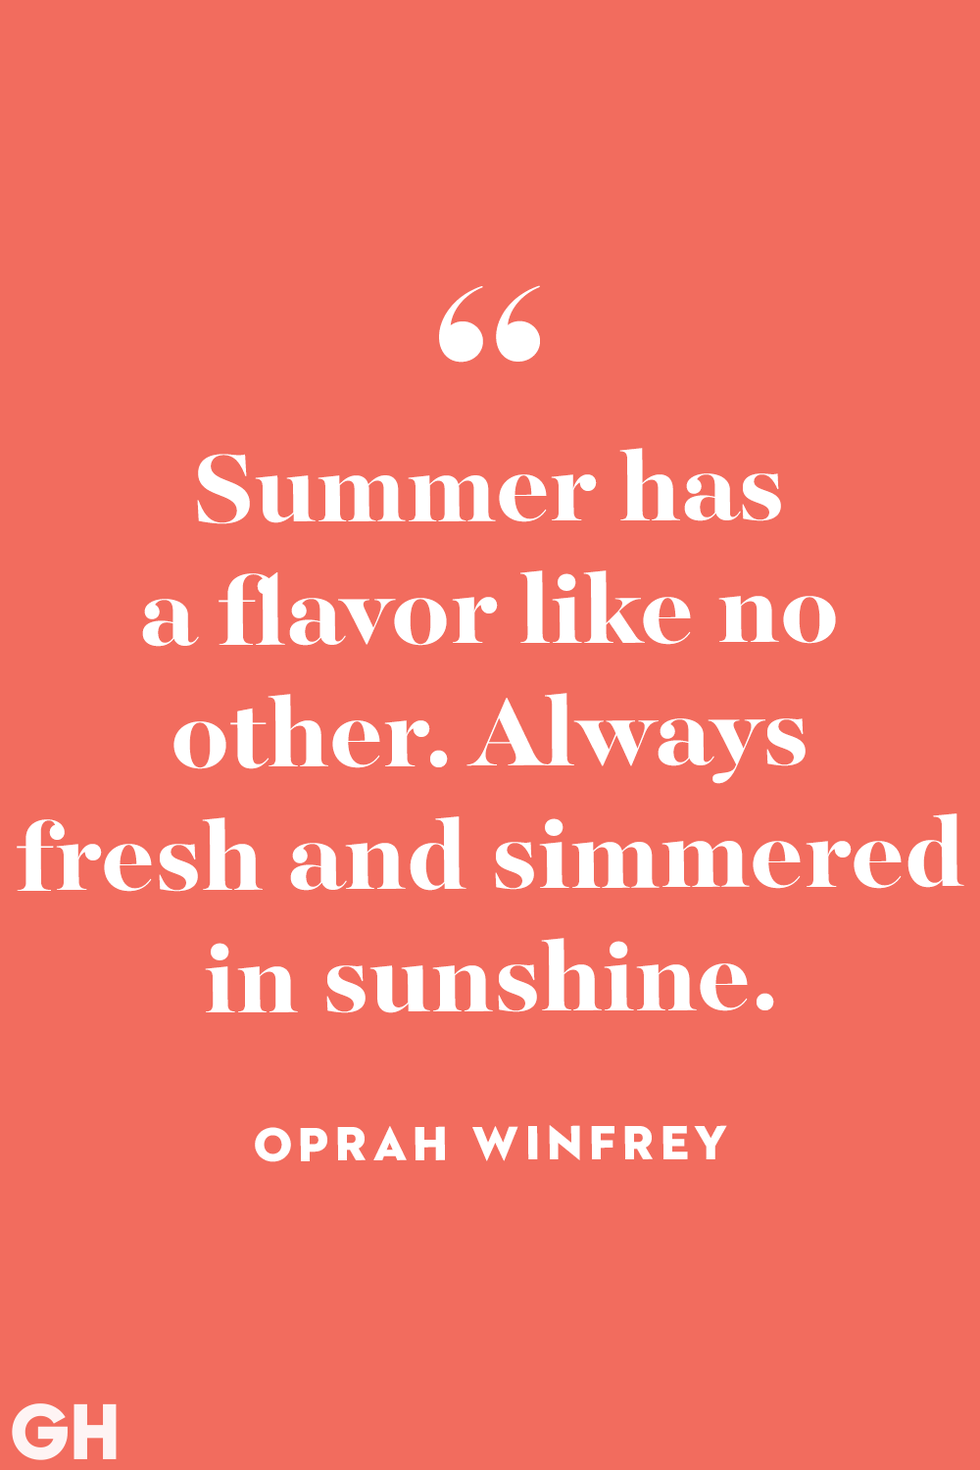 quote about summer by oprah winfrey